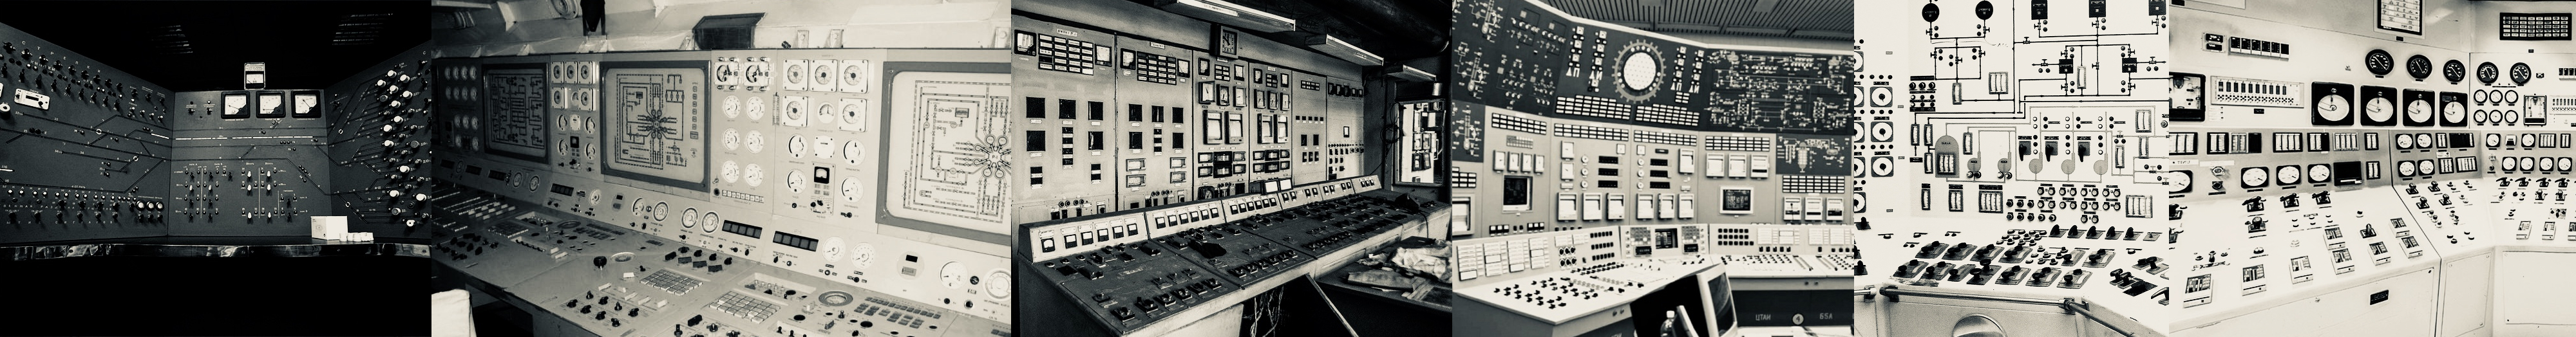 industrial control rooms